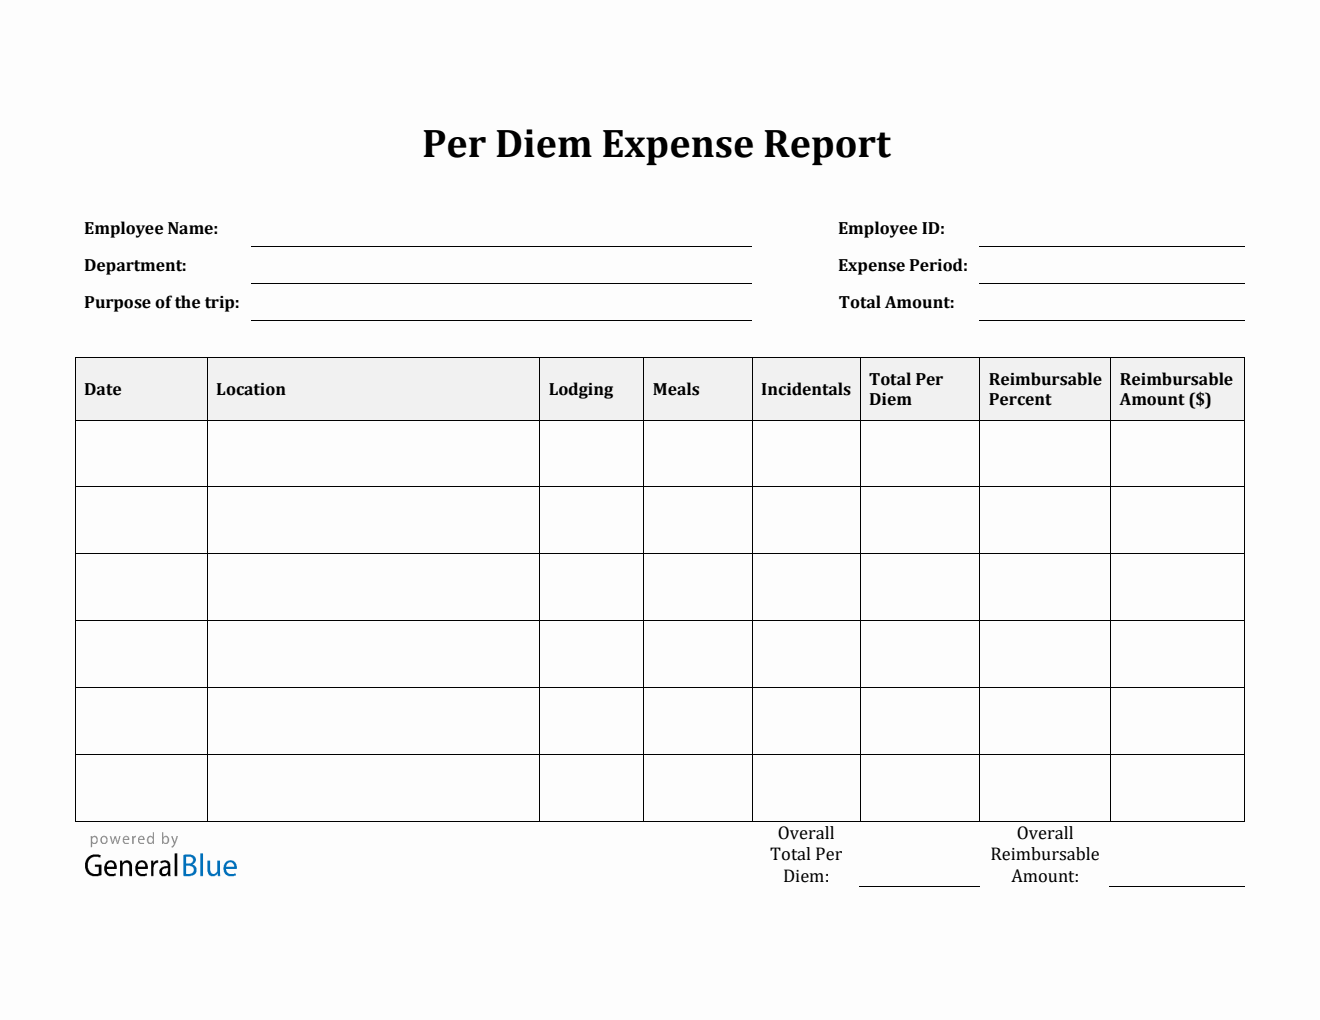 Blank Per Diem Expense Report Template in PDF (Plain)